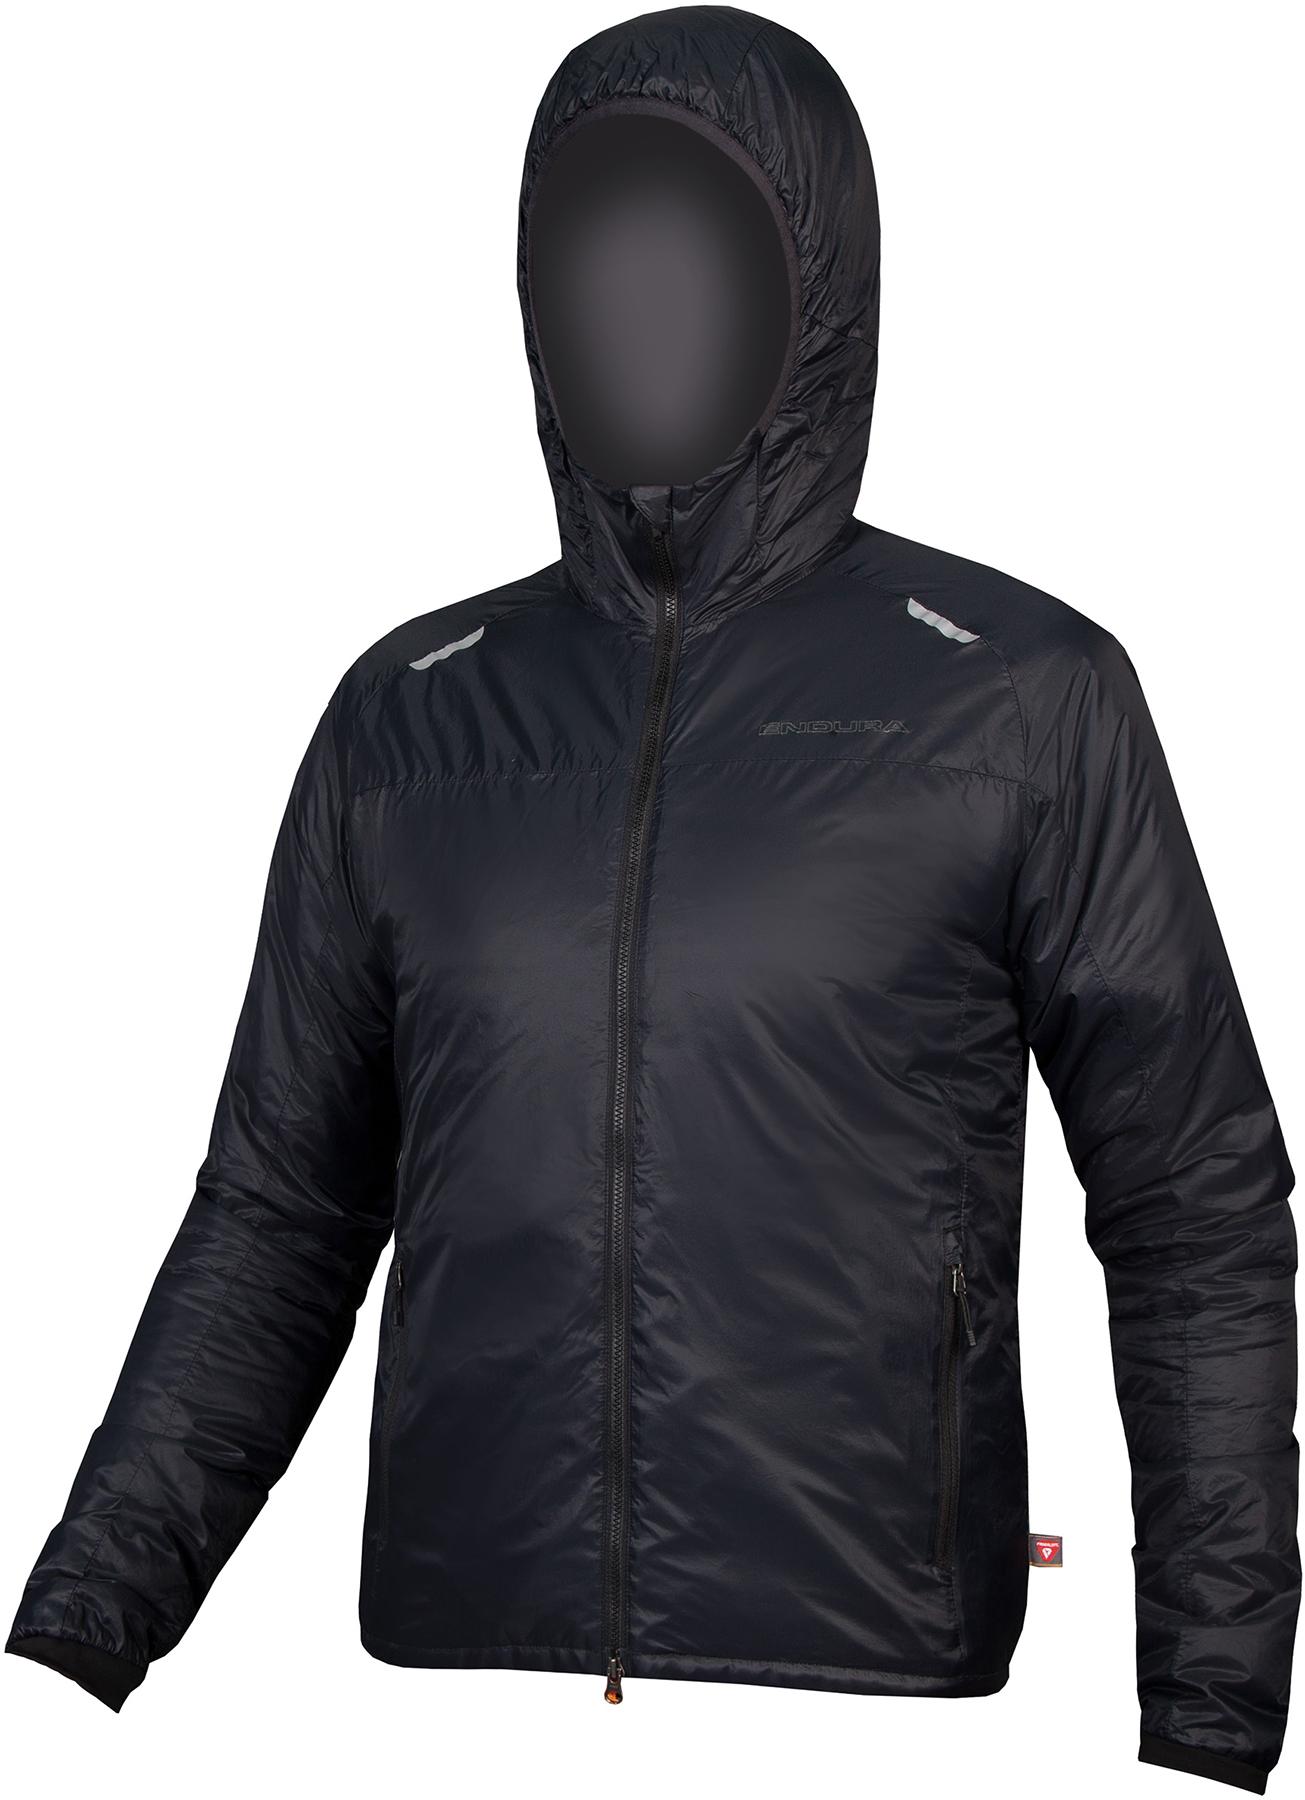 Endura Gv500 Insulated Jacket - Black